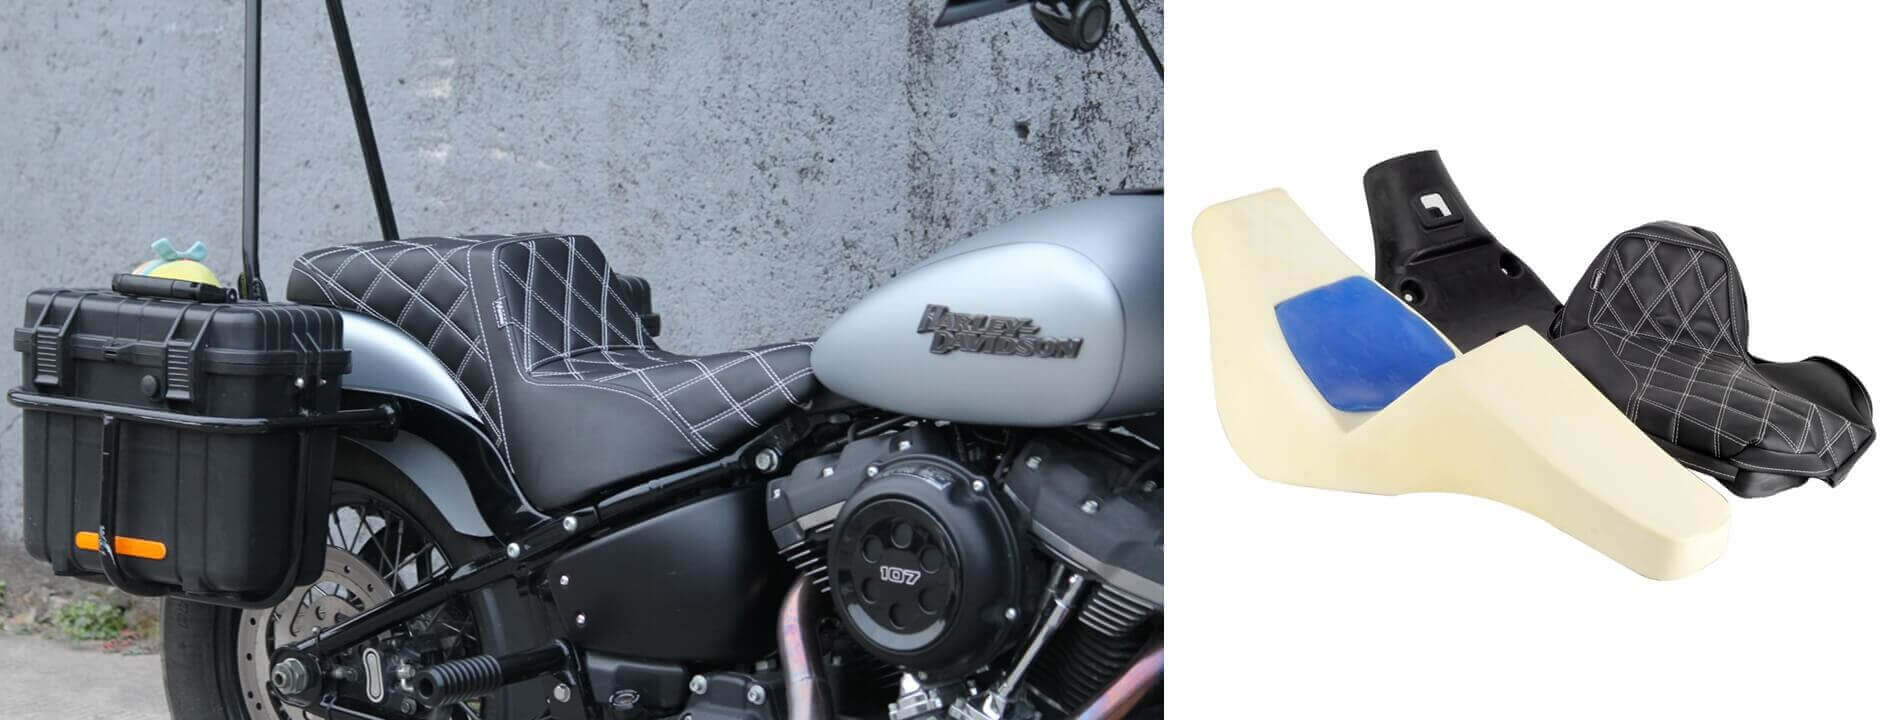 Universal Motorcycle Front Fork Tool Bag Saddlebags Storage Luggage Ro